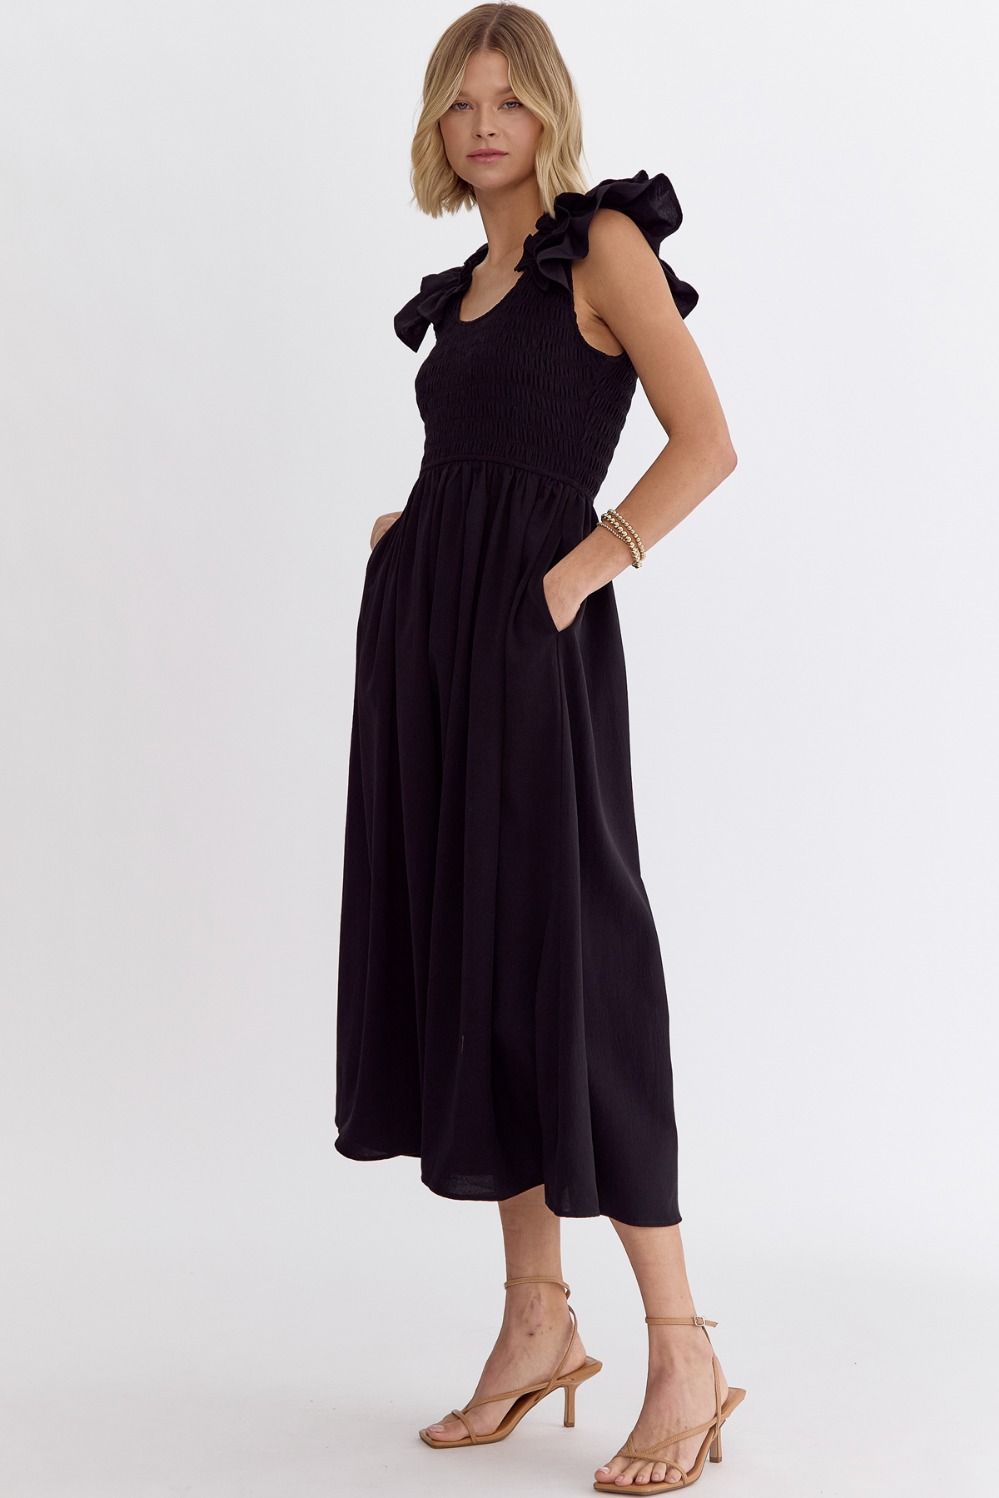 ENTRO INC Women's Dresses BLACK / S Solid Sleeveless Smocked Midi Dress || David's Clothing D21279